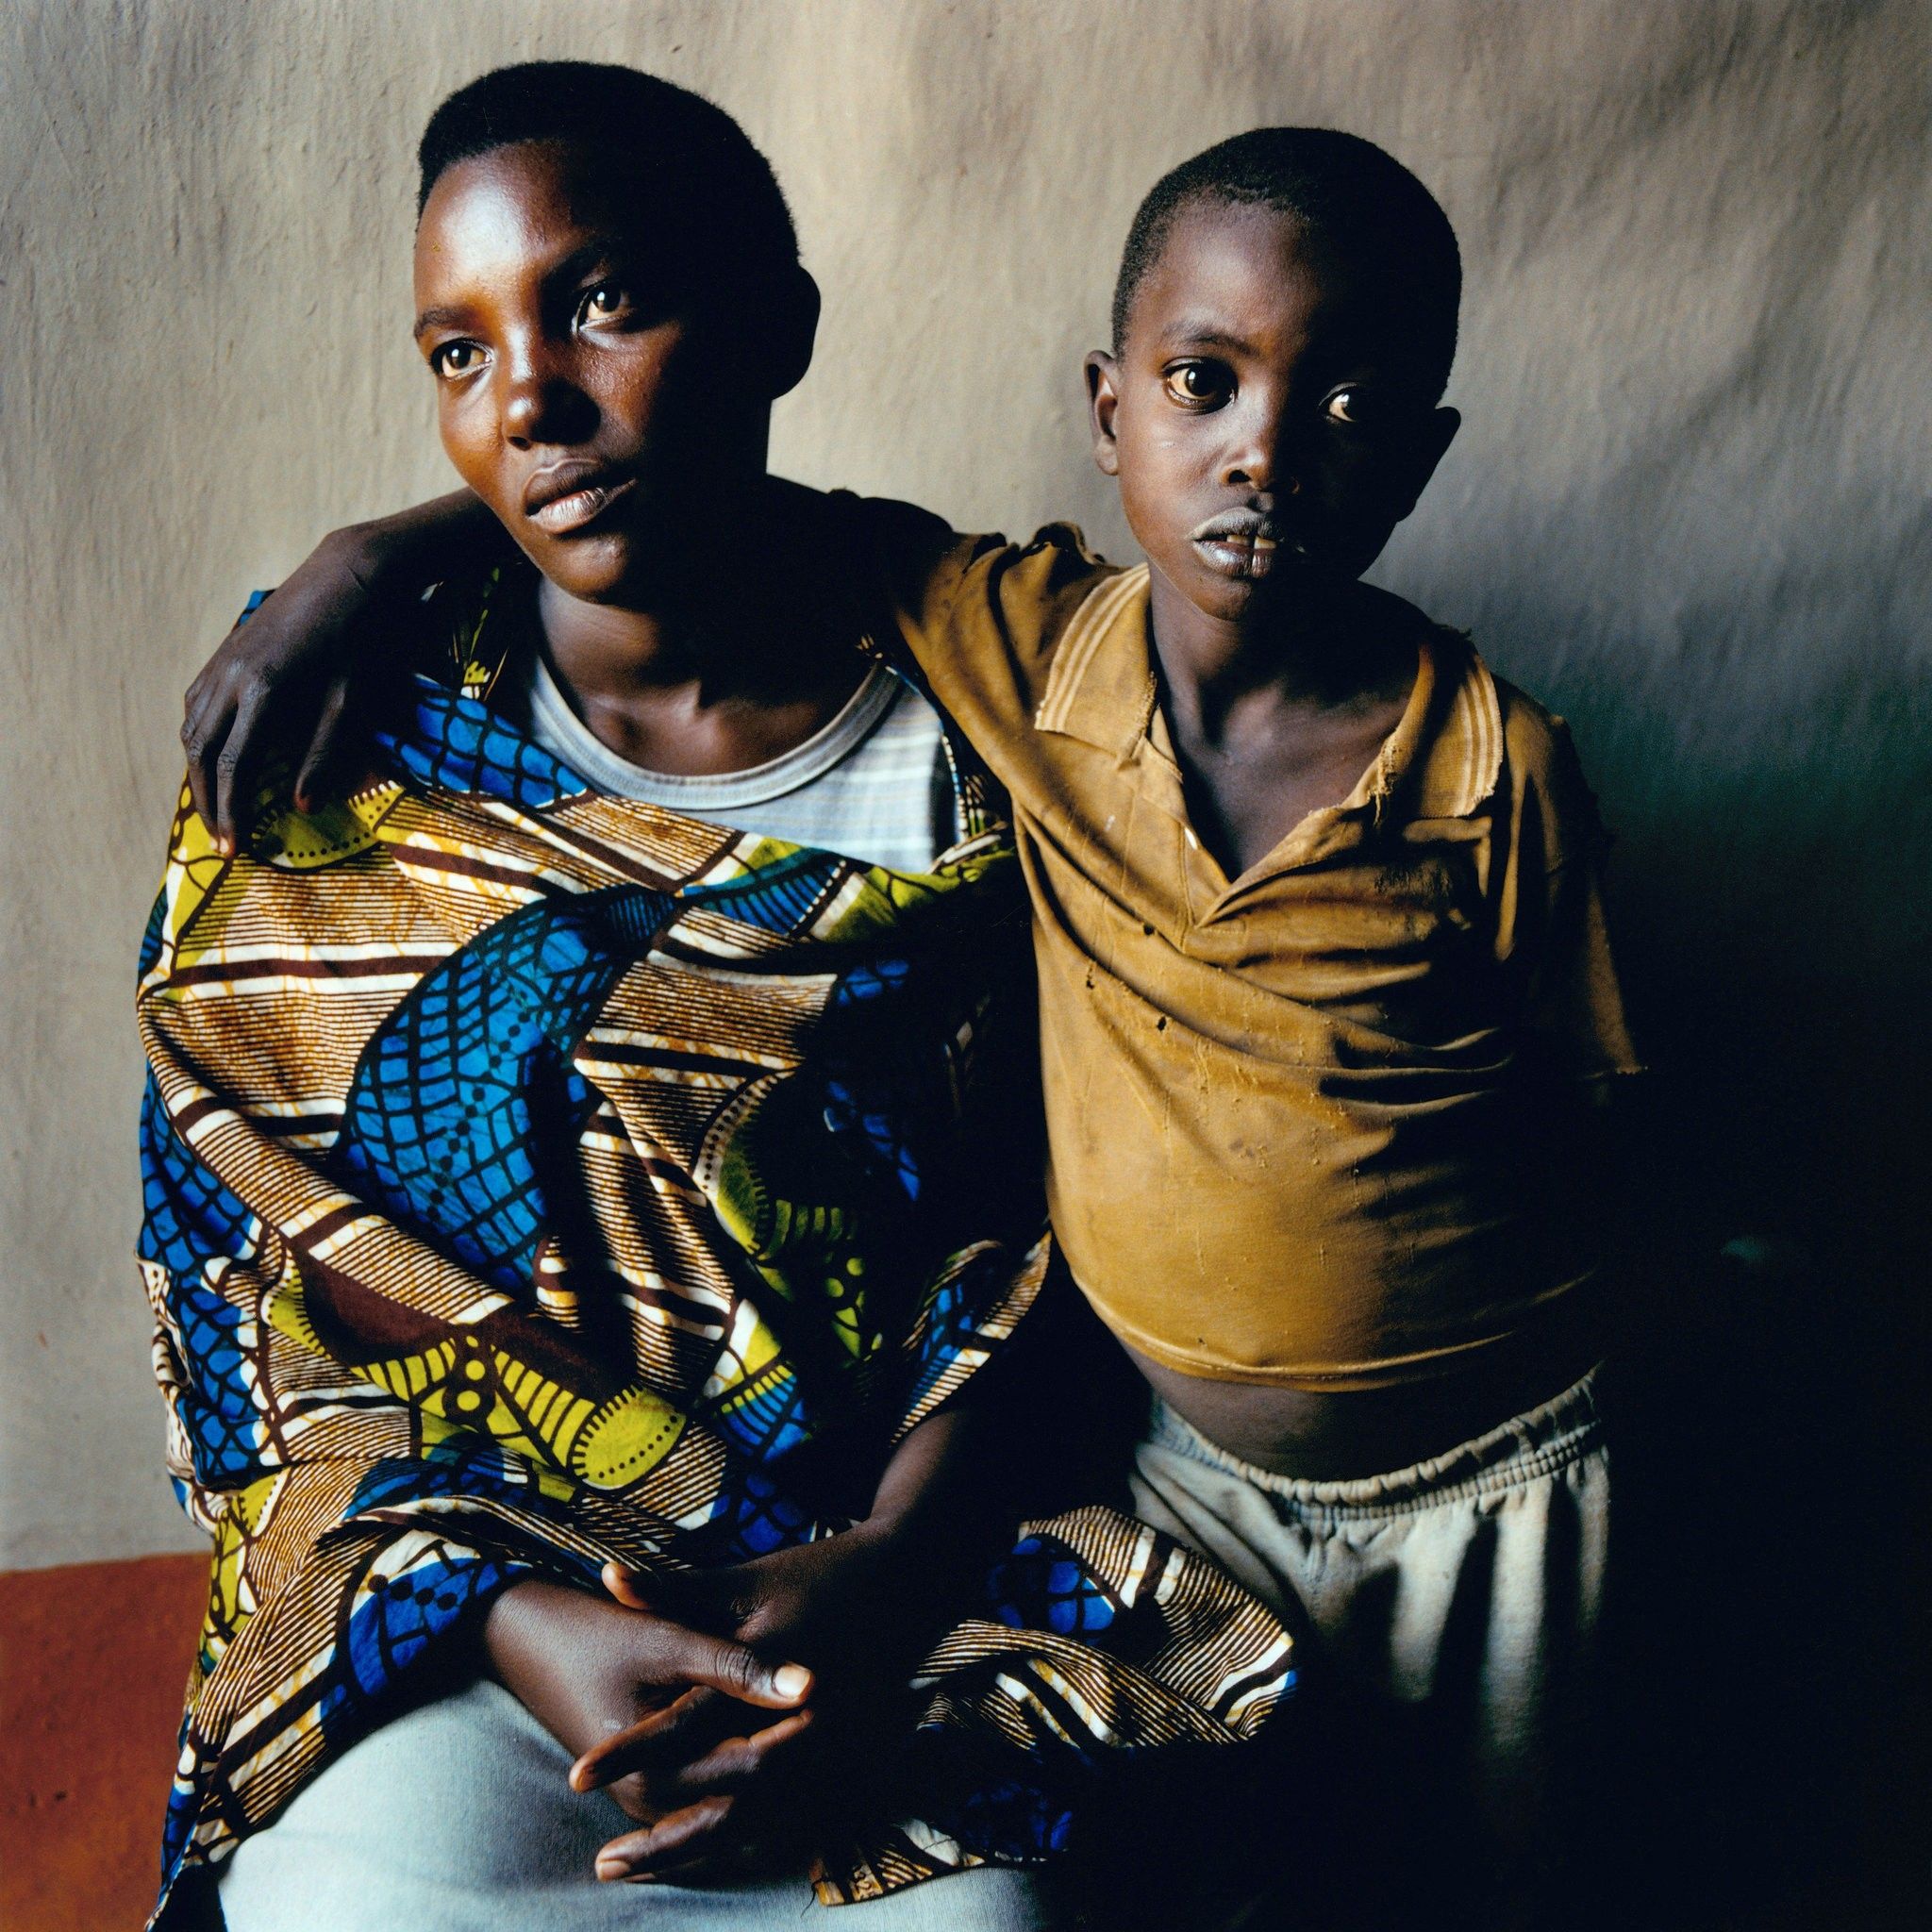 Valerie and Robert. Image by Jonathan Torgovnik. Rwanda, 2006.